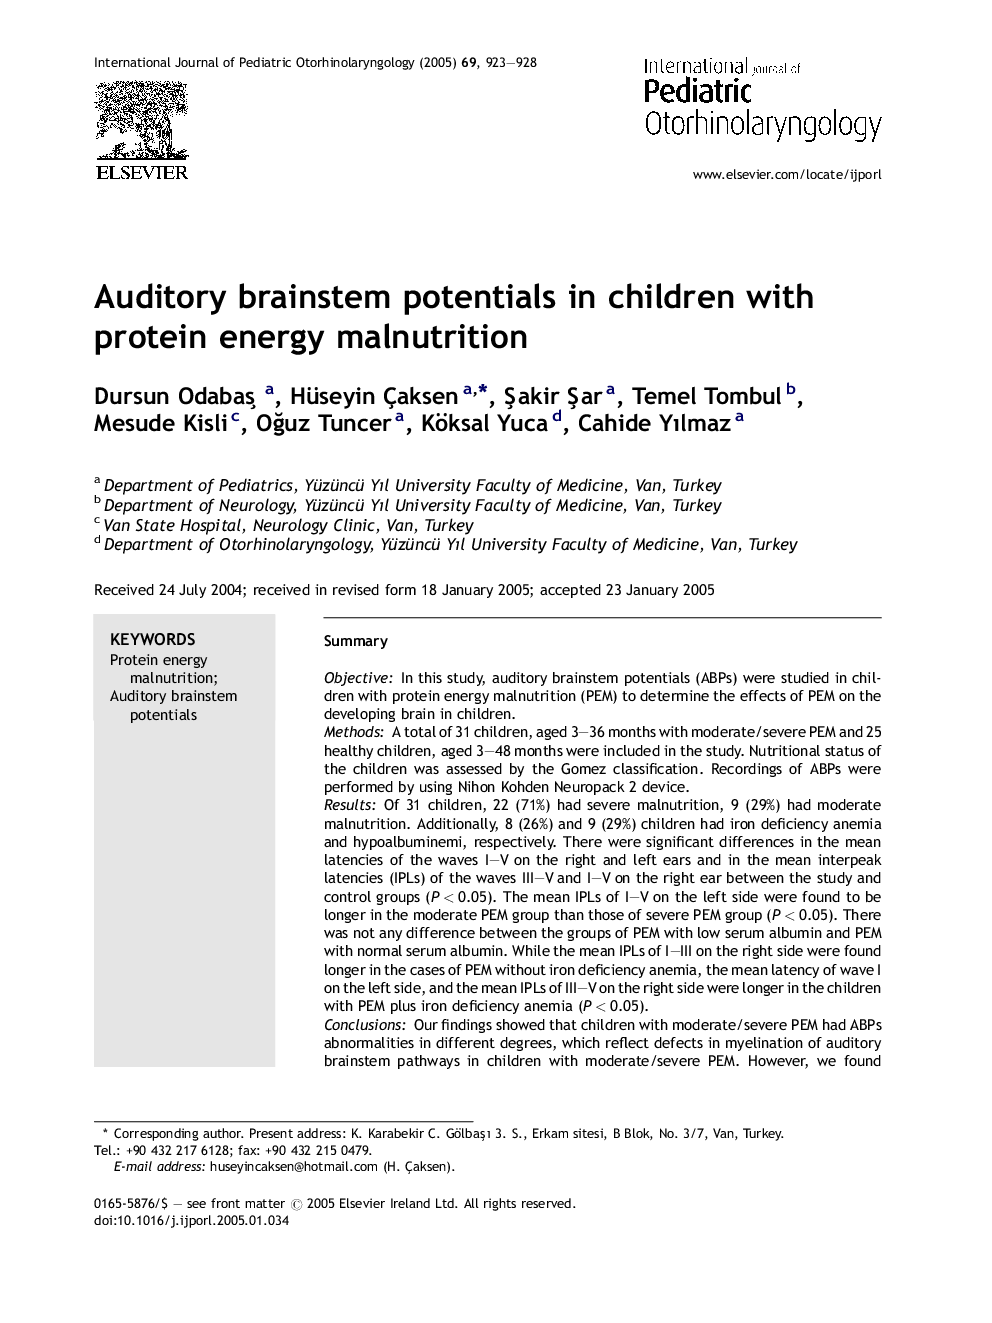 Auditory brainstem potentials in children with protein energy malnutrition